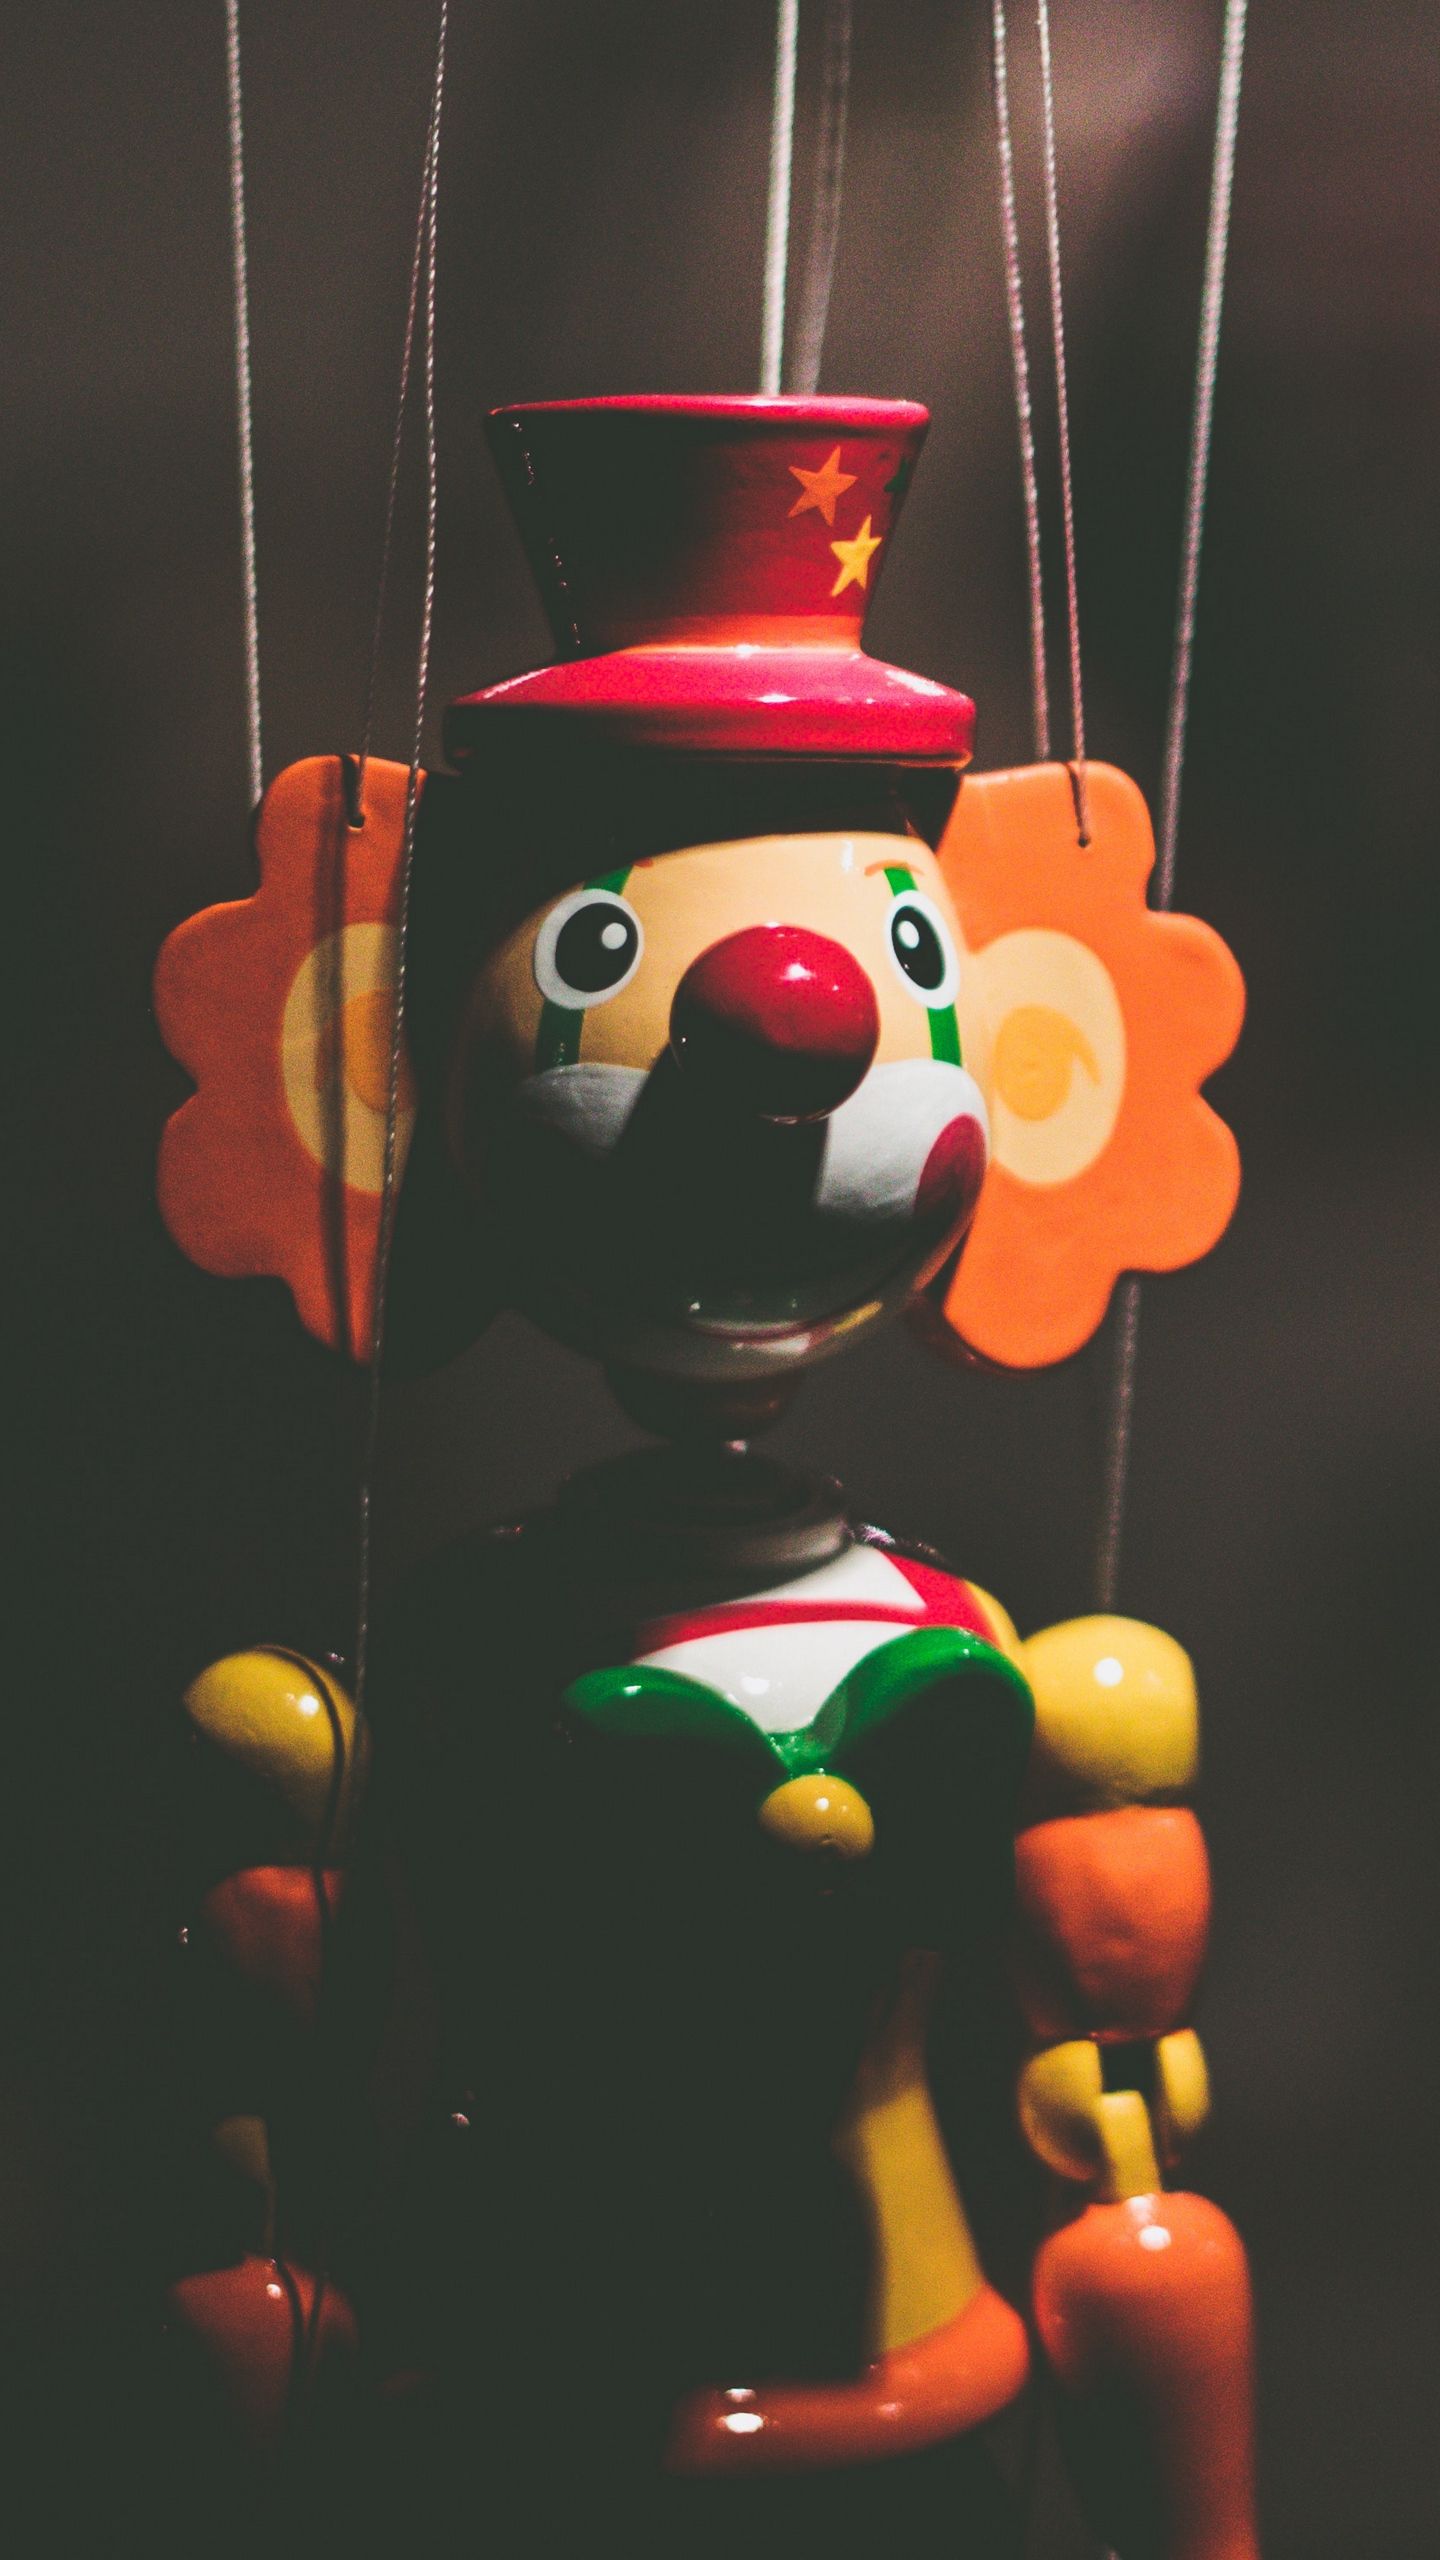 Download wallpaper 1440x2560 clown, toy, marionette qhd samsung